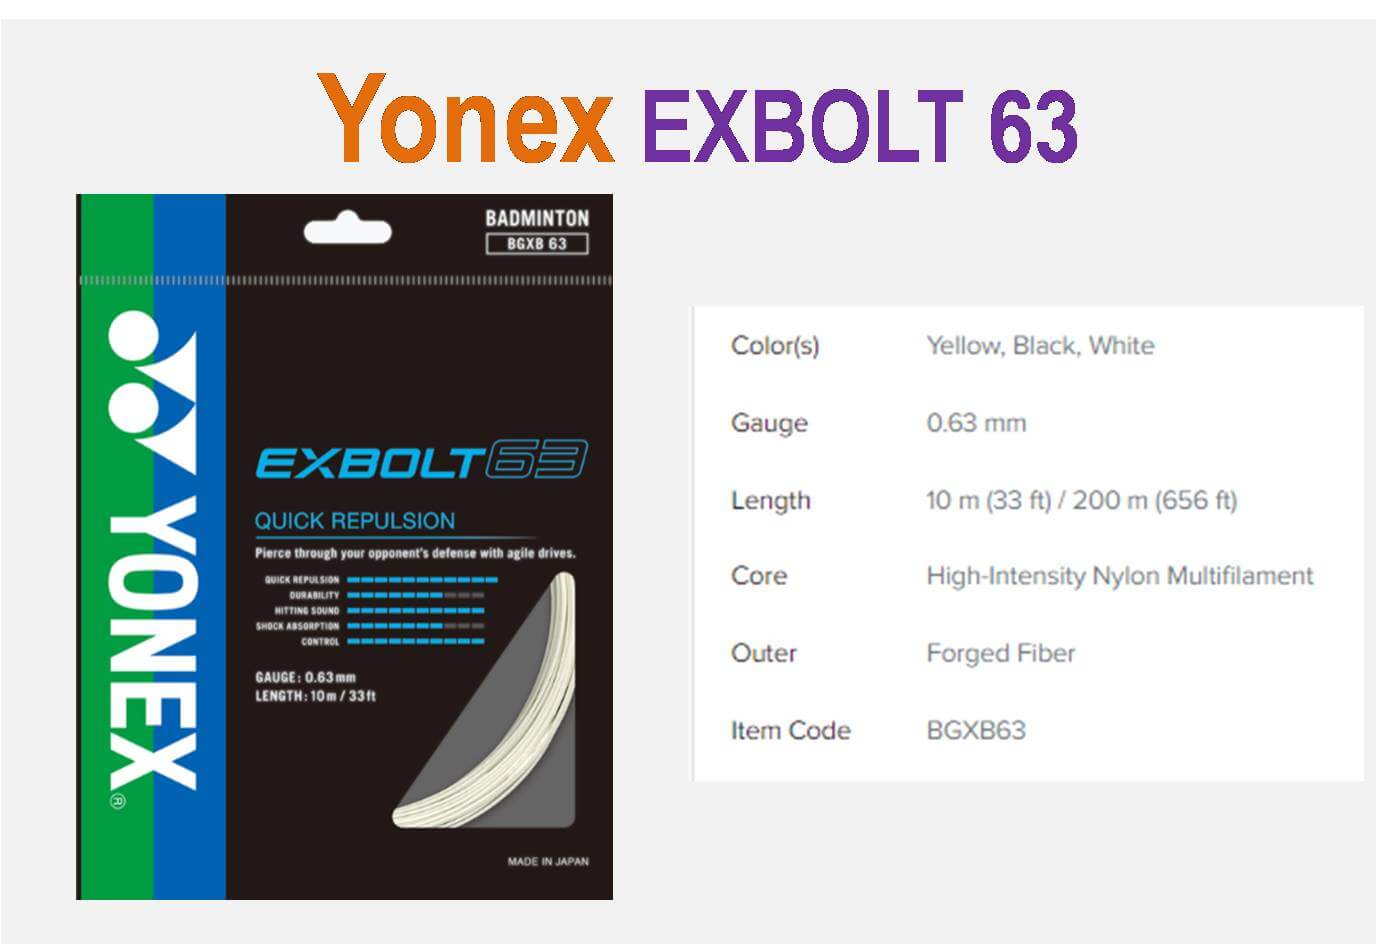 Yonex_EXBOLT_63_details_01_Khelmart.jpg